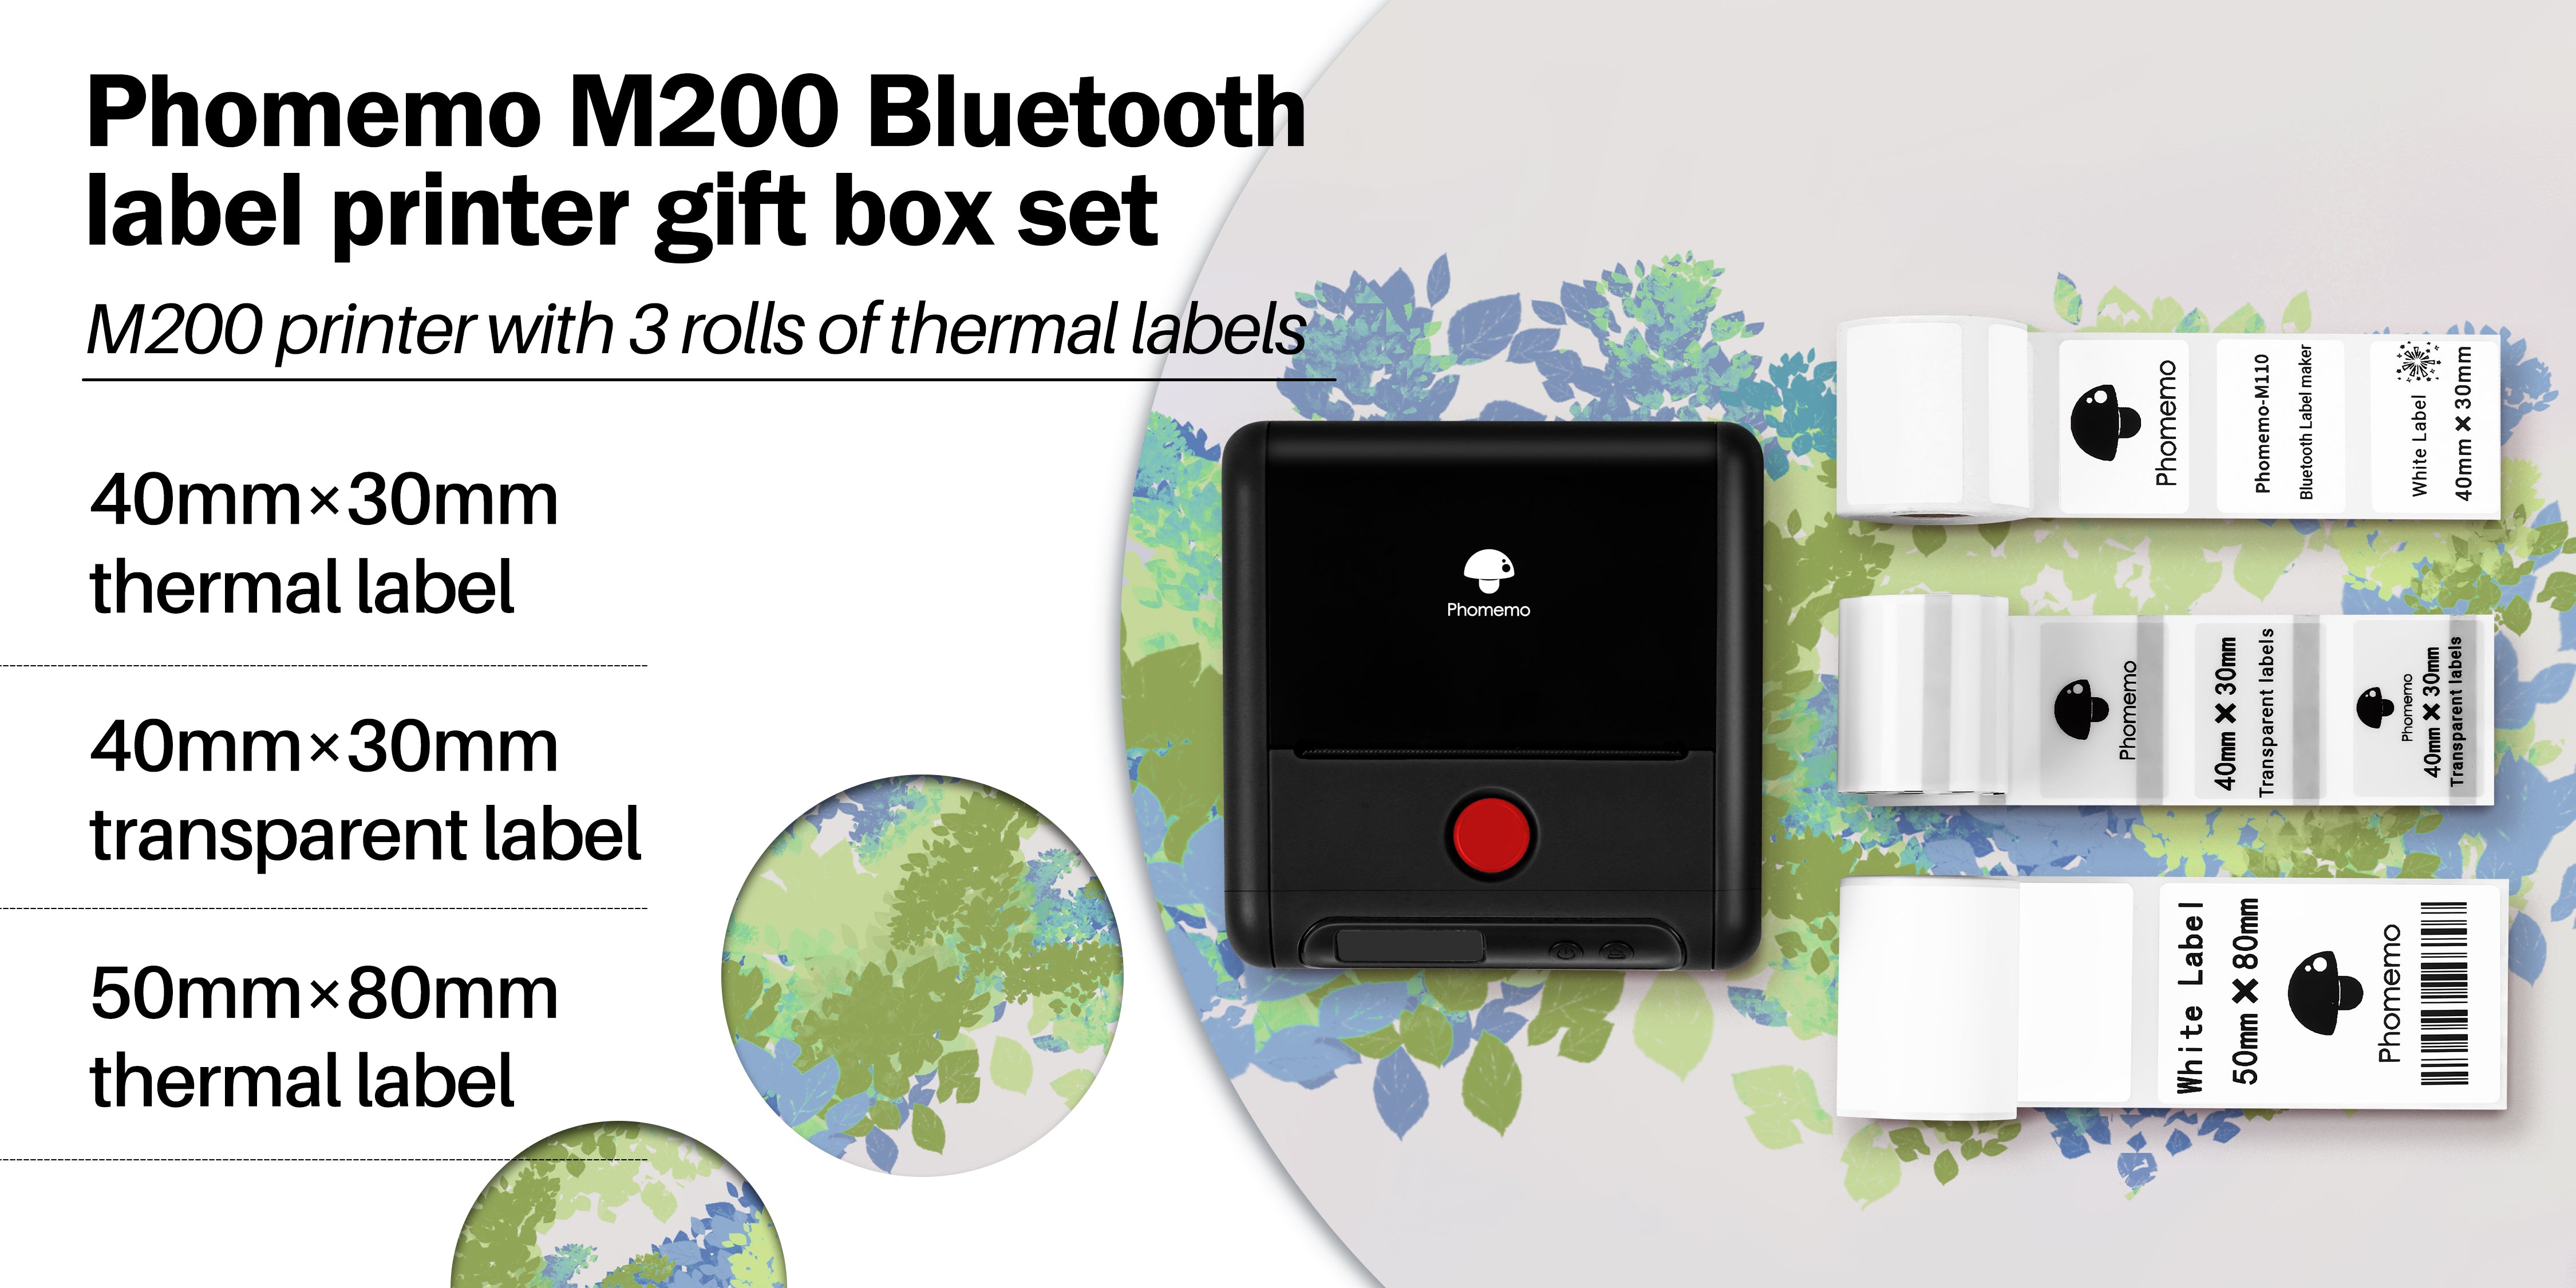 M200 Bluetooth Label Printer Gift Box Set – Phomemo